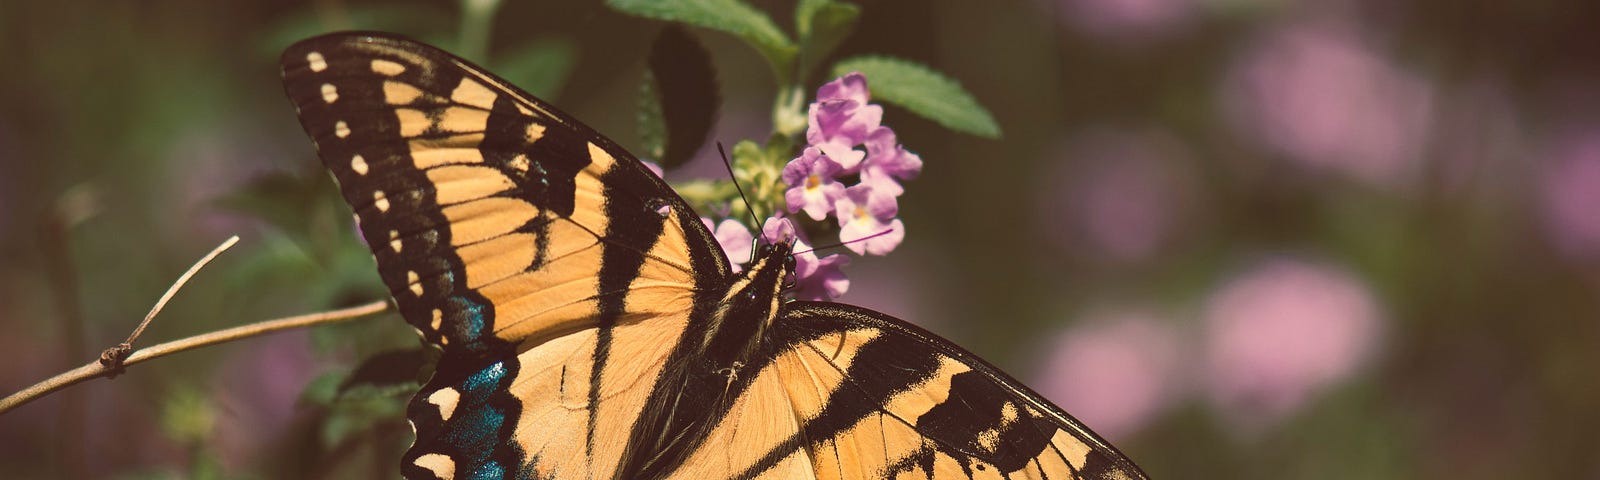 Tiger swallowtail butterfly. Photo by Scott Carroll on Unsplash